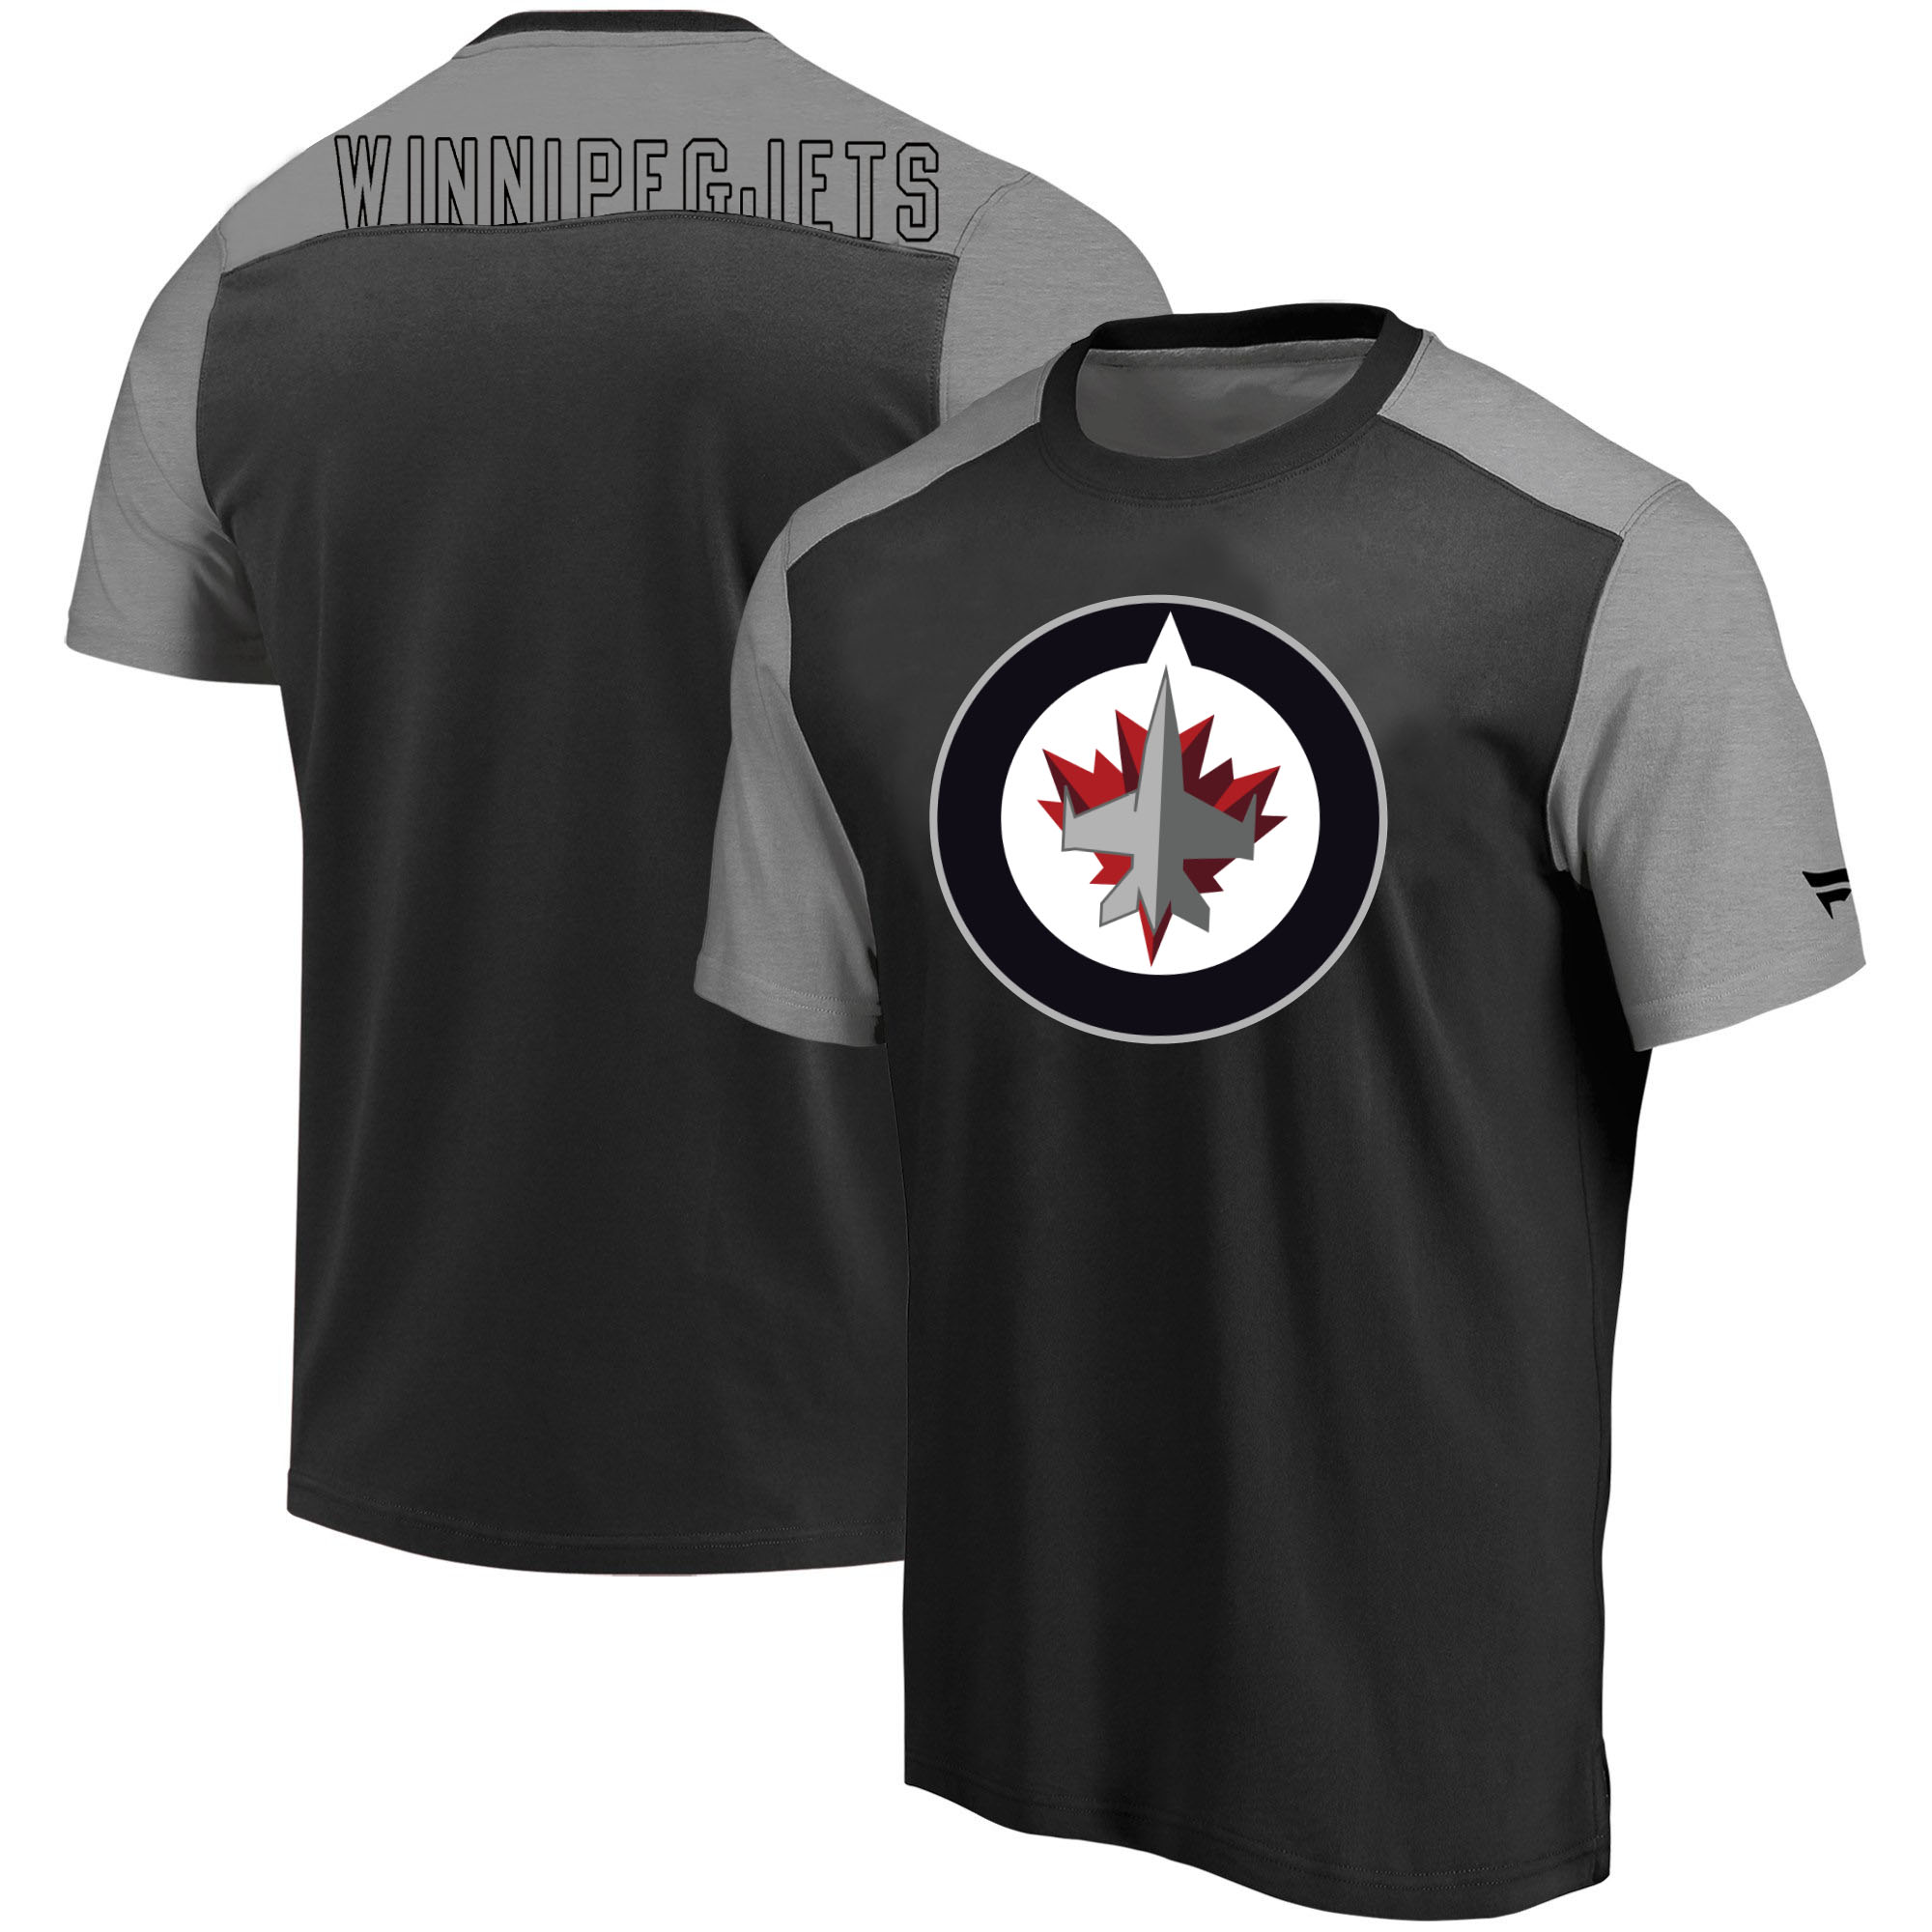 Winnipeg Jets Fanatics Branded Iconic Blocked T-Shirt Black Heathered Gray - Click Image to Close